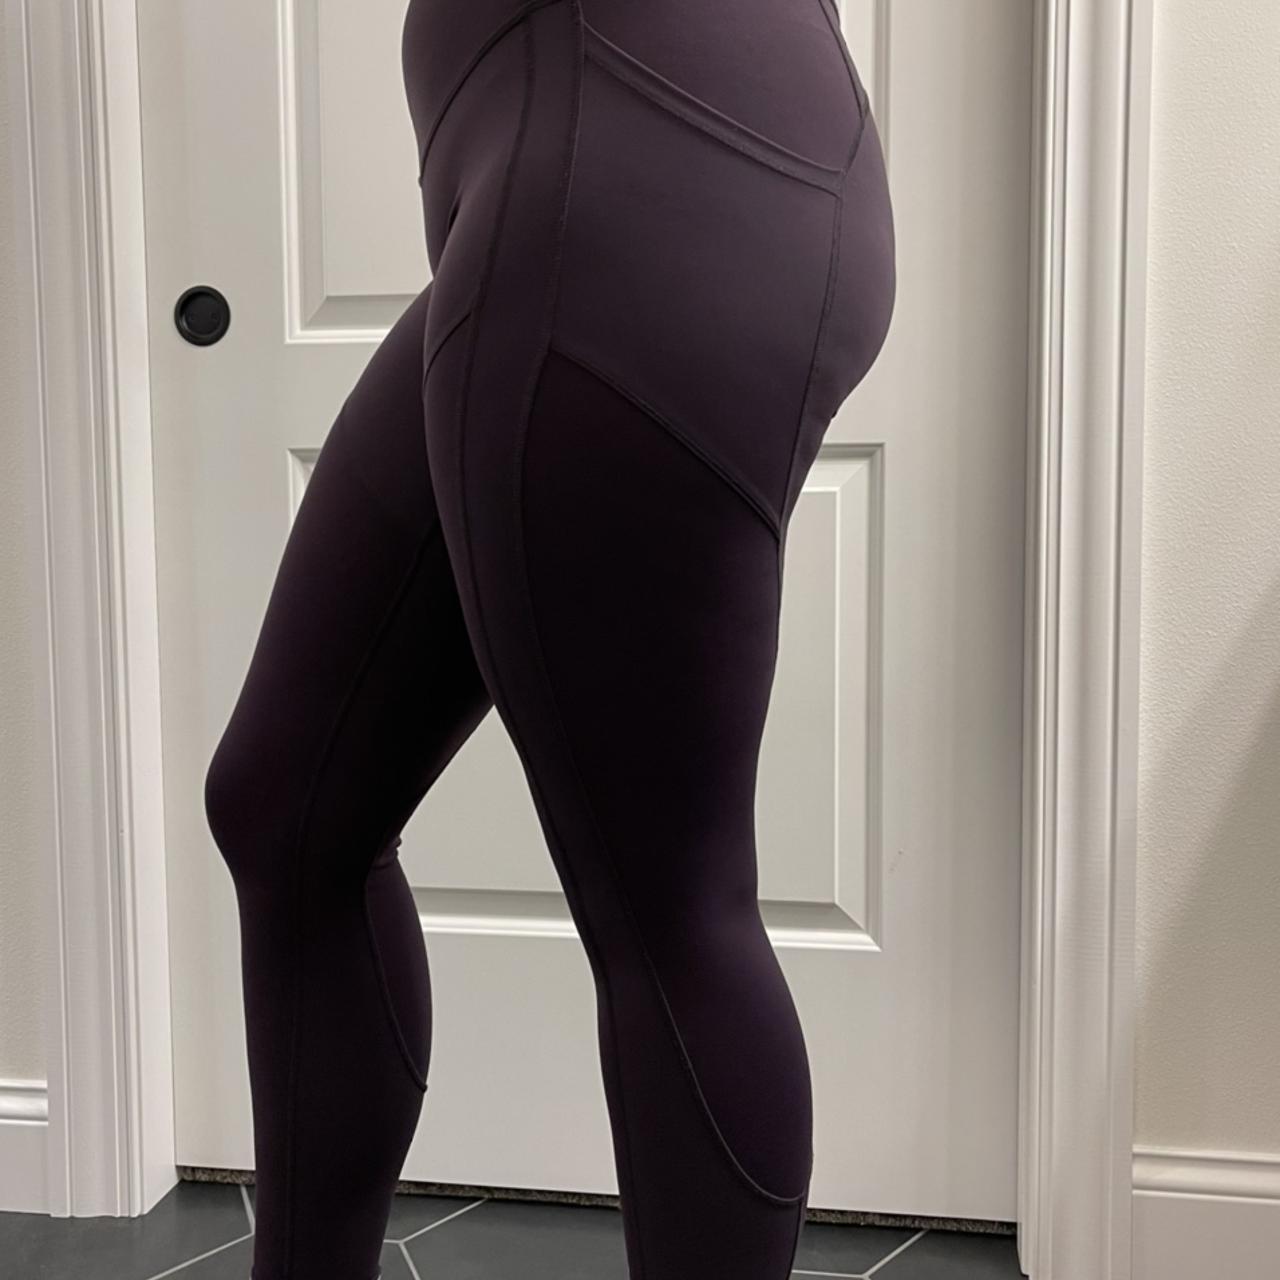 Lululemon leggings, dark purple, with side pockets!